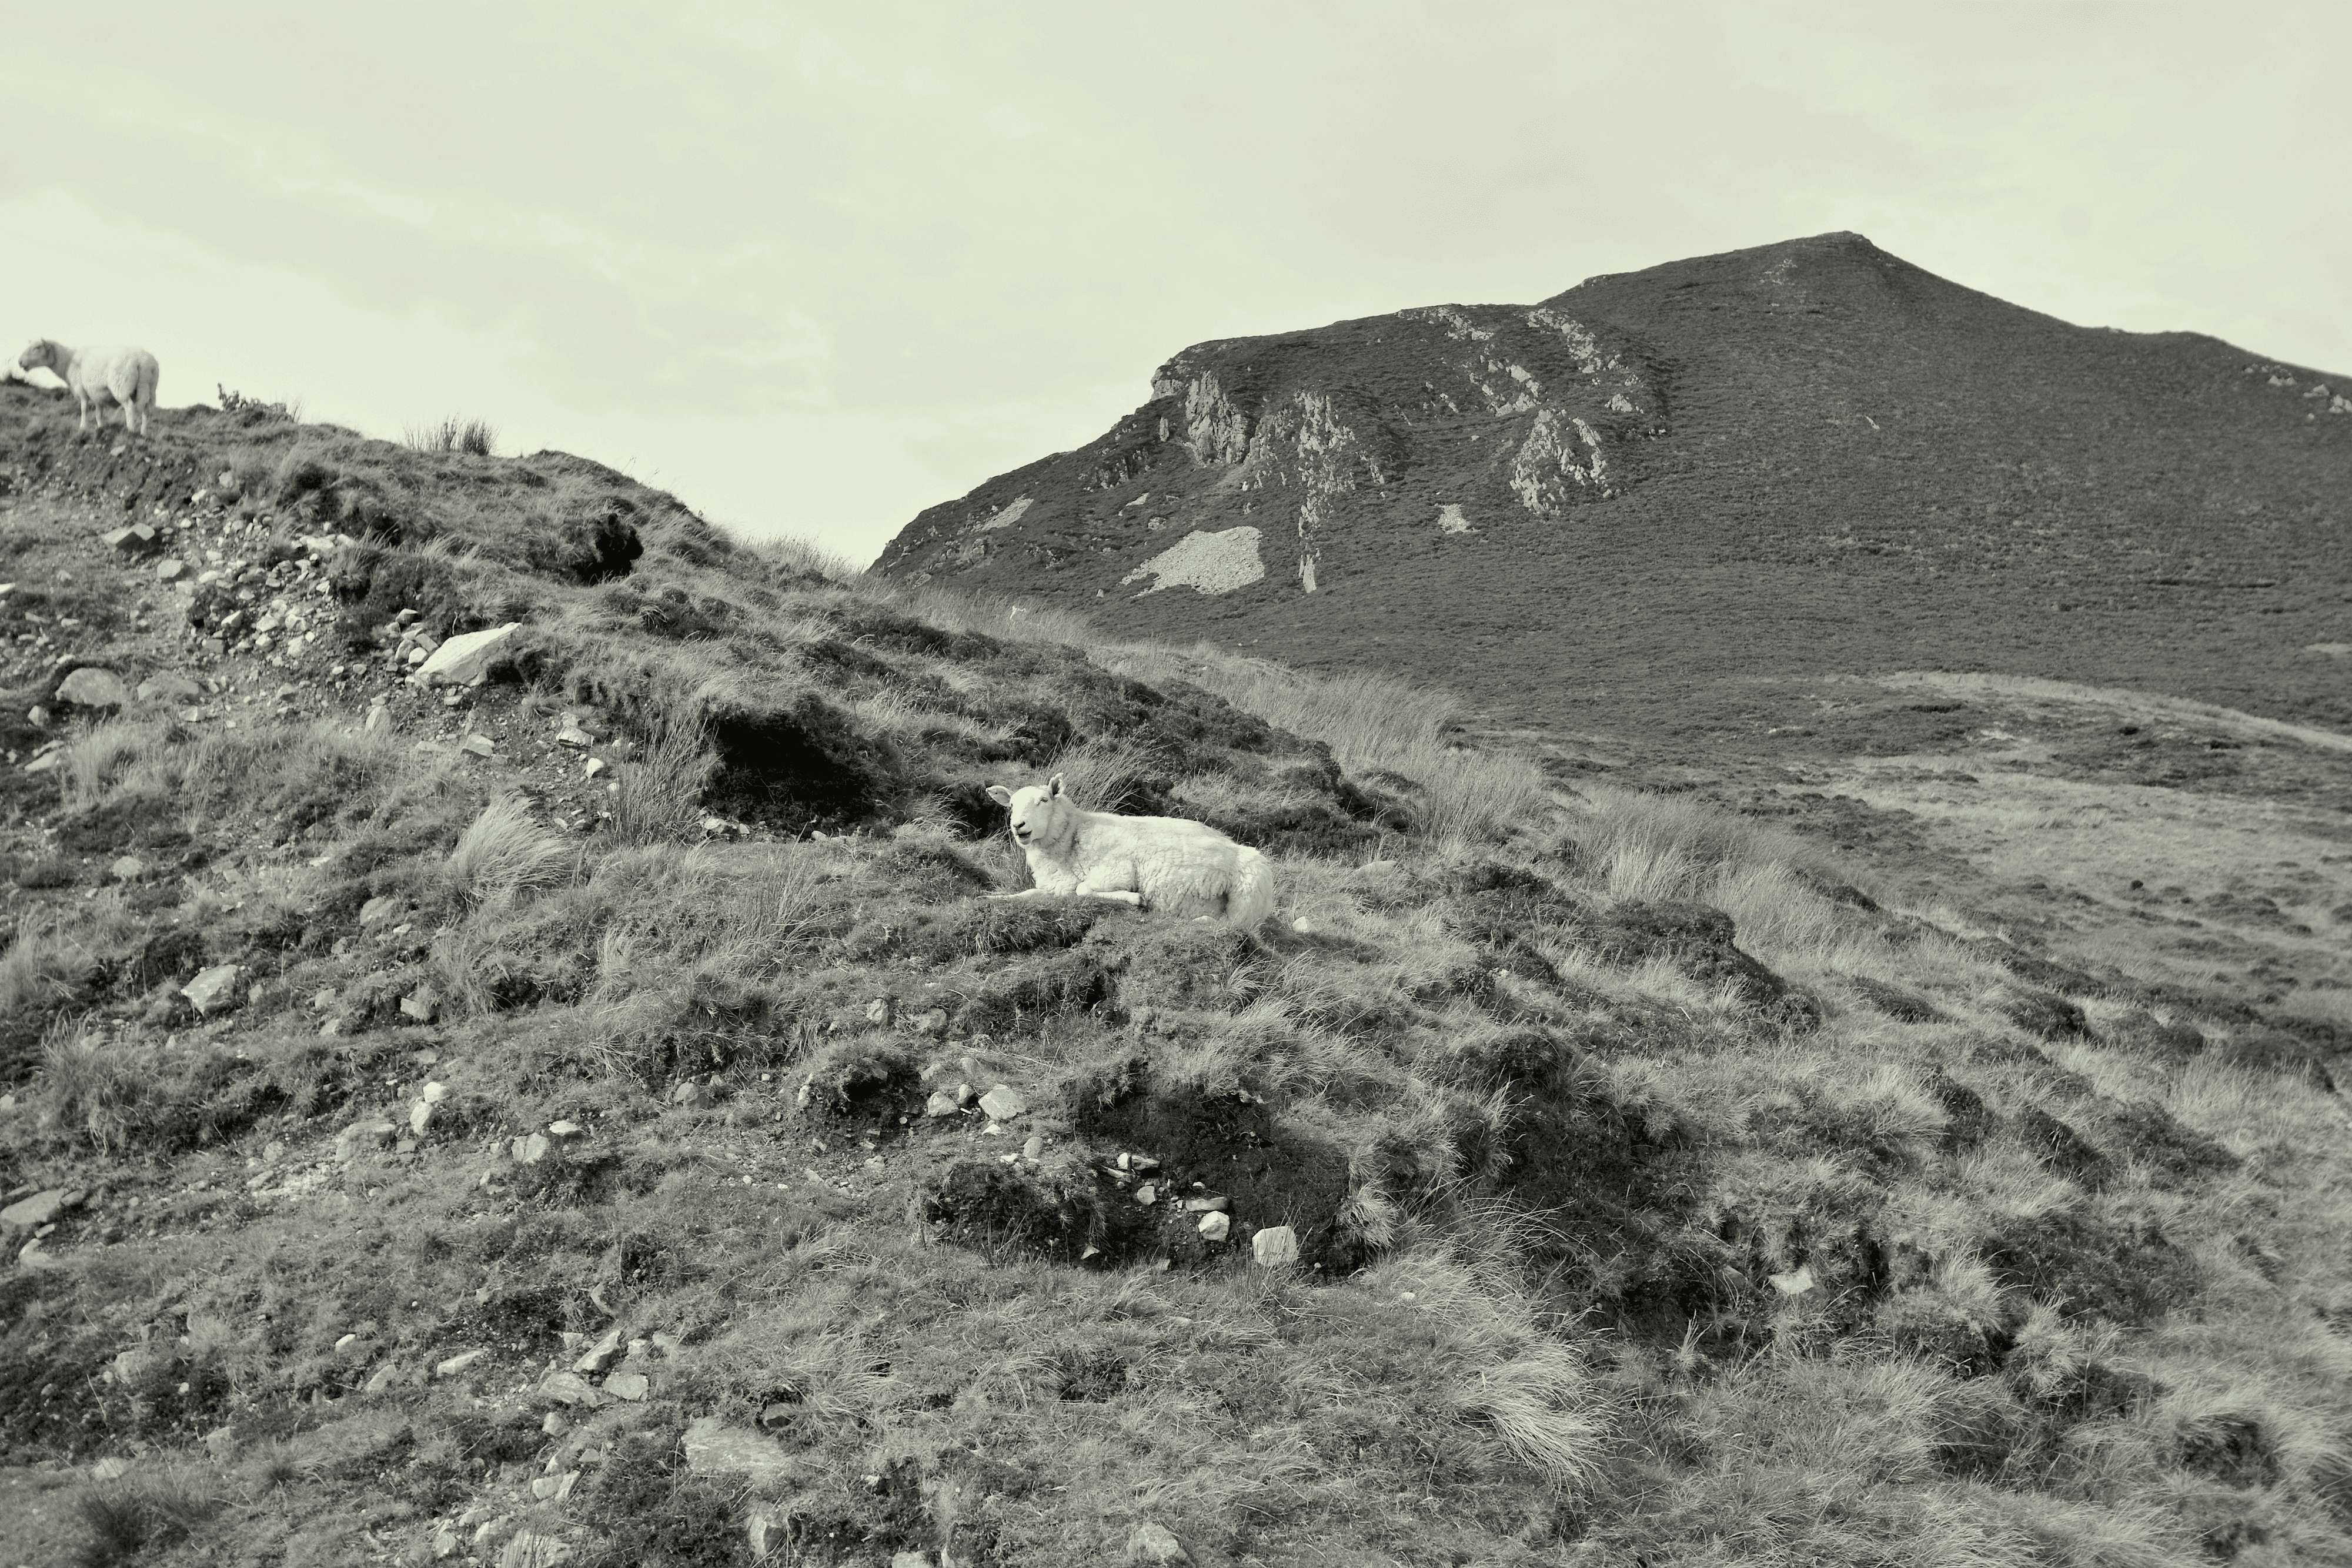 Irish Tranquility and a sheep